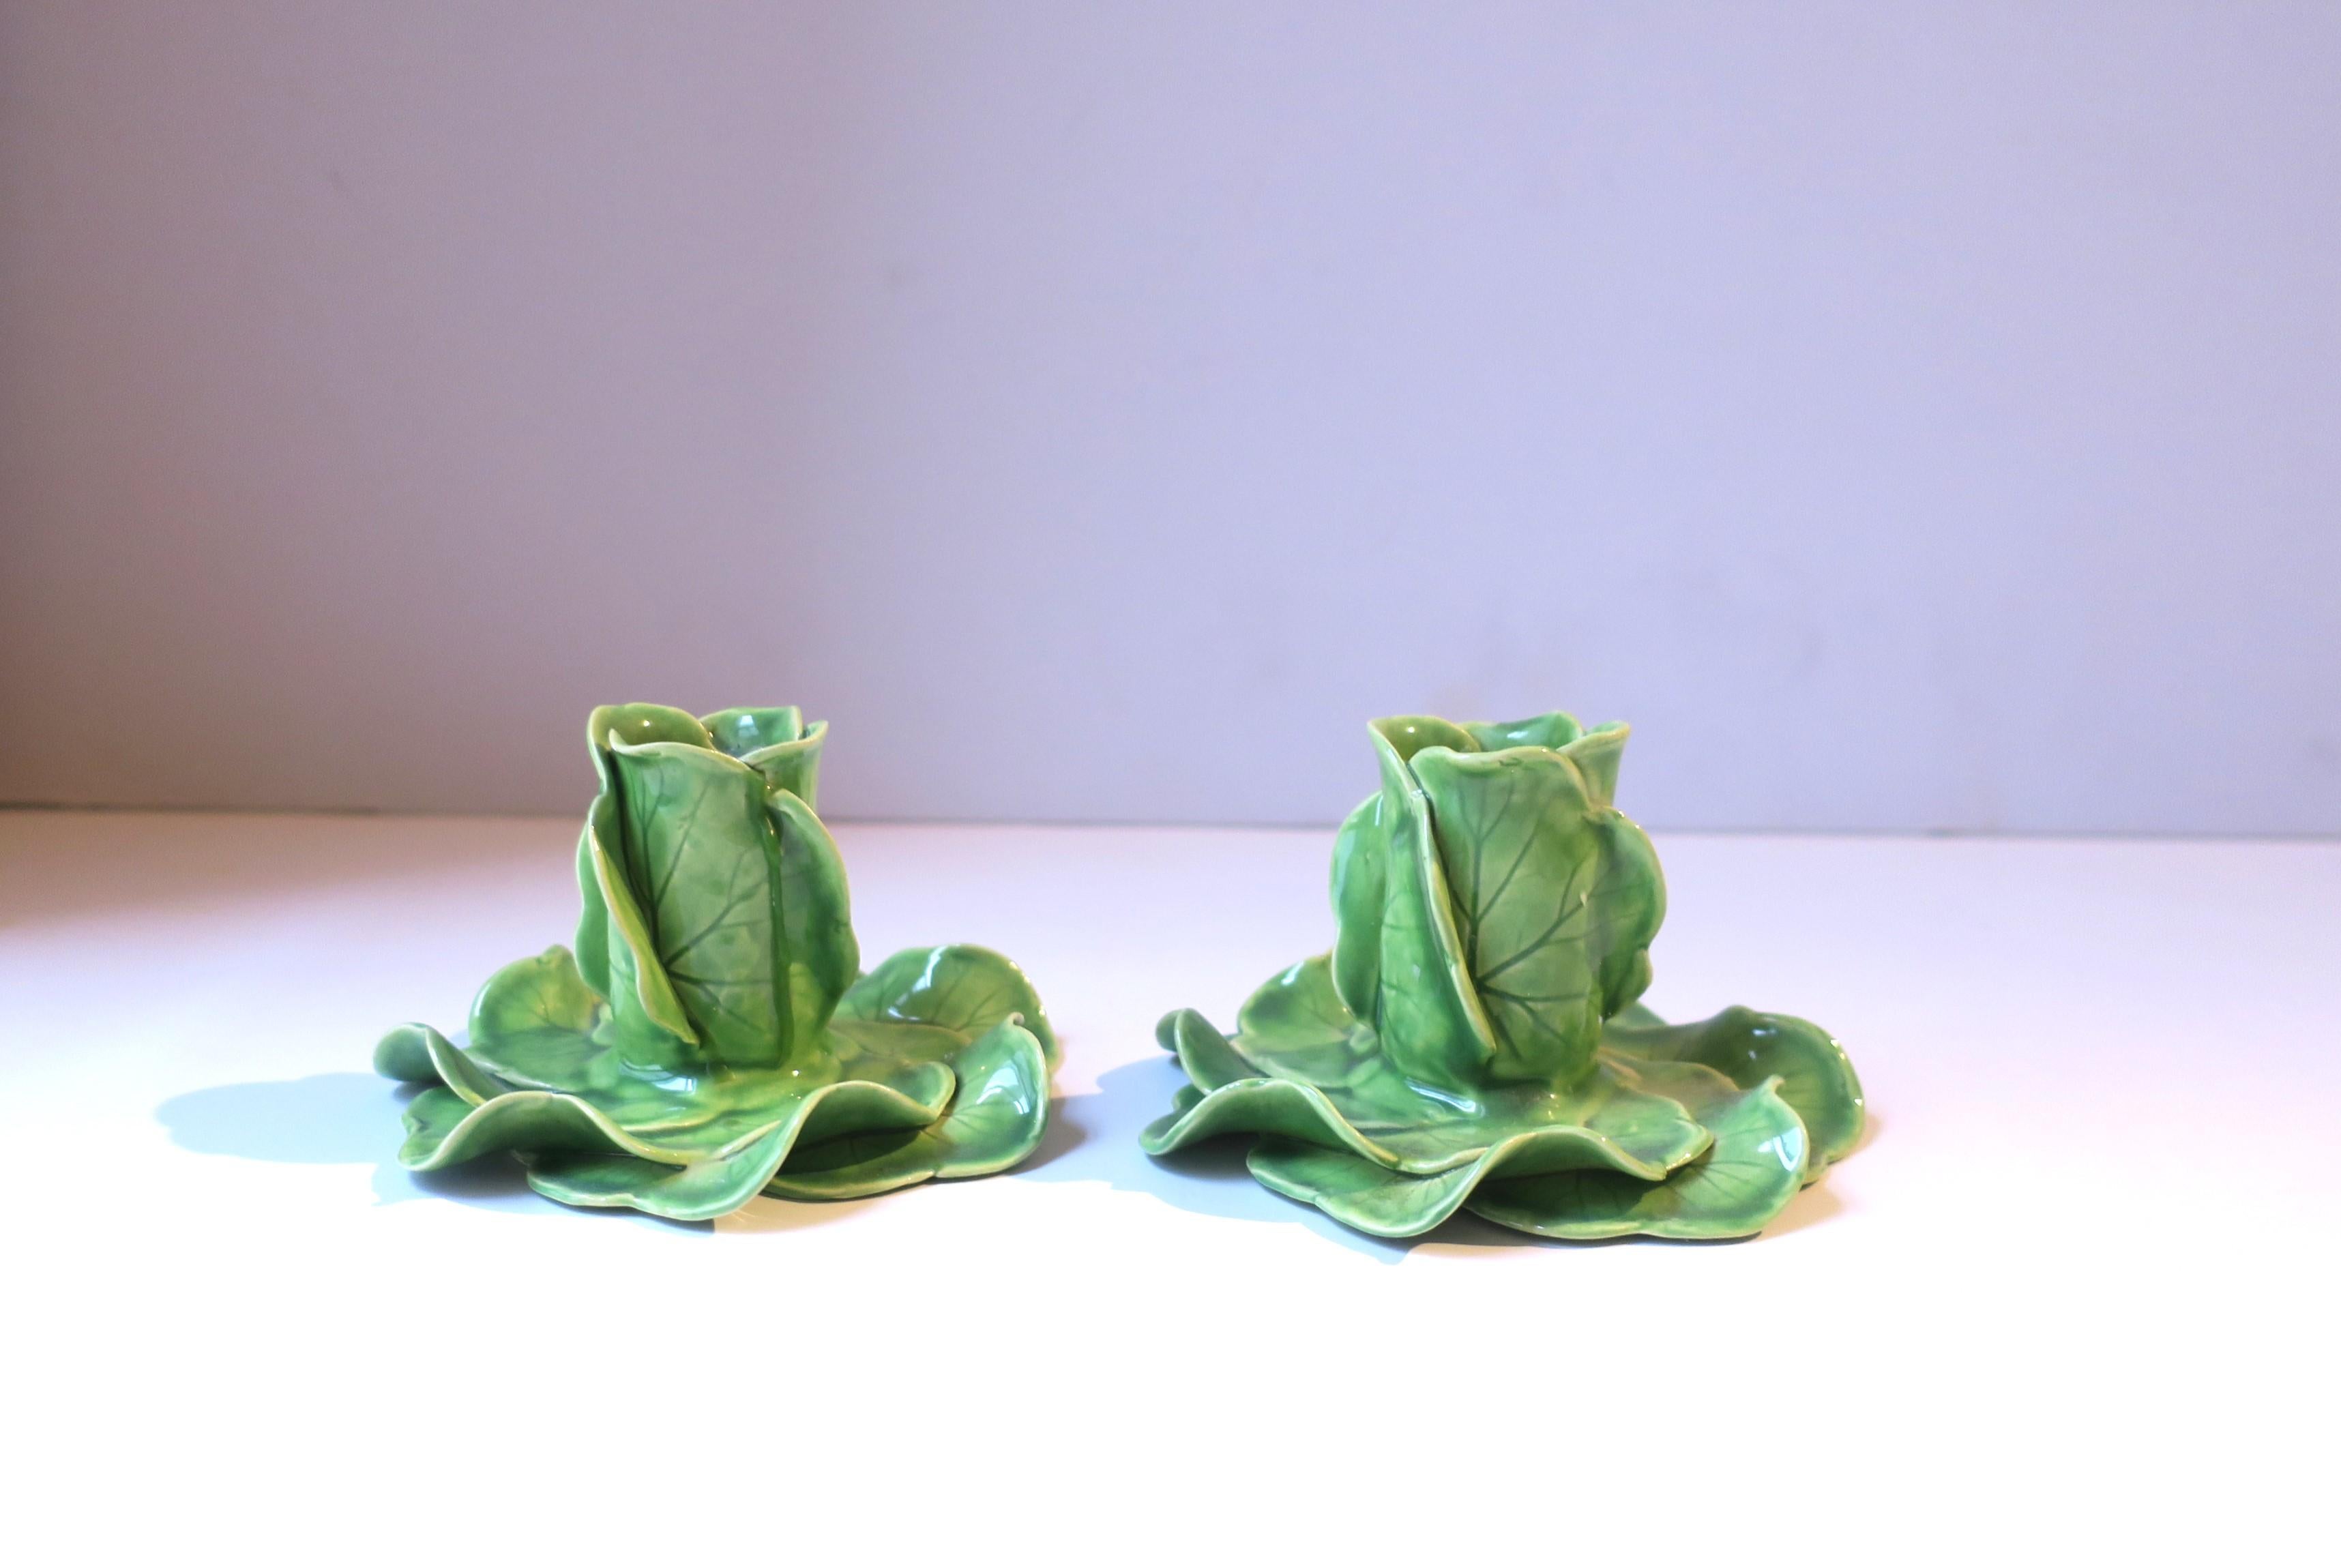 Australian Green Porcelain Lettuce Leaf Candlestick Holders Styled After Dodie Thayer